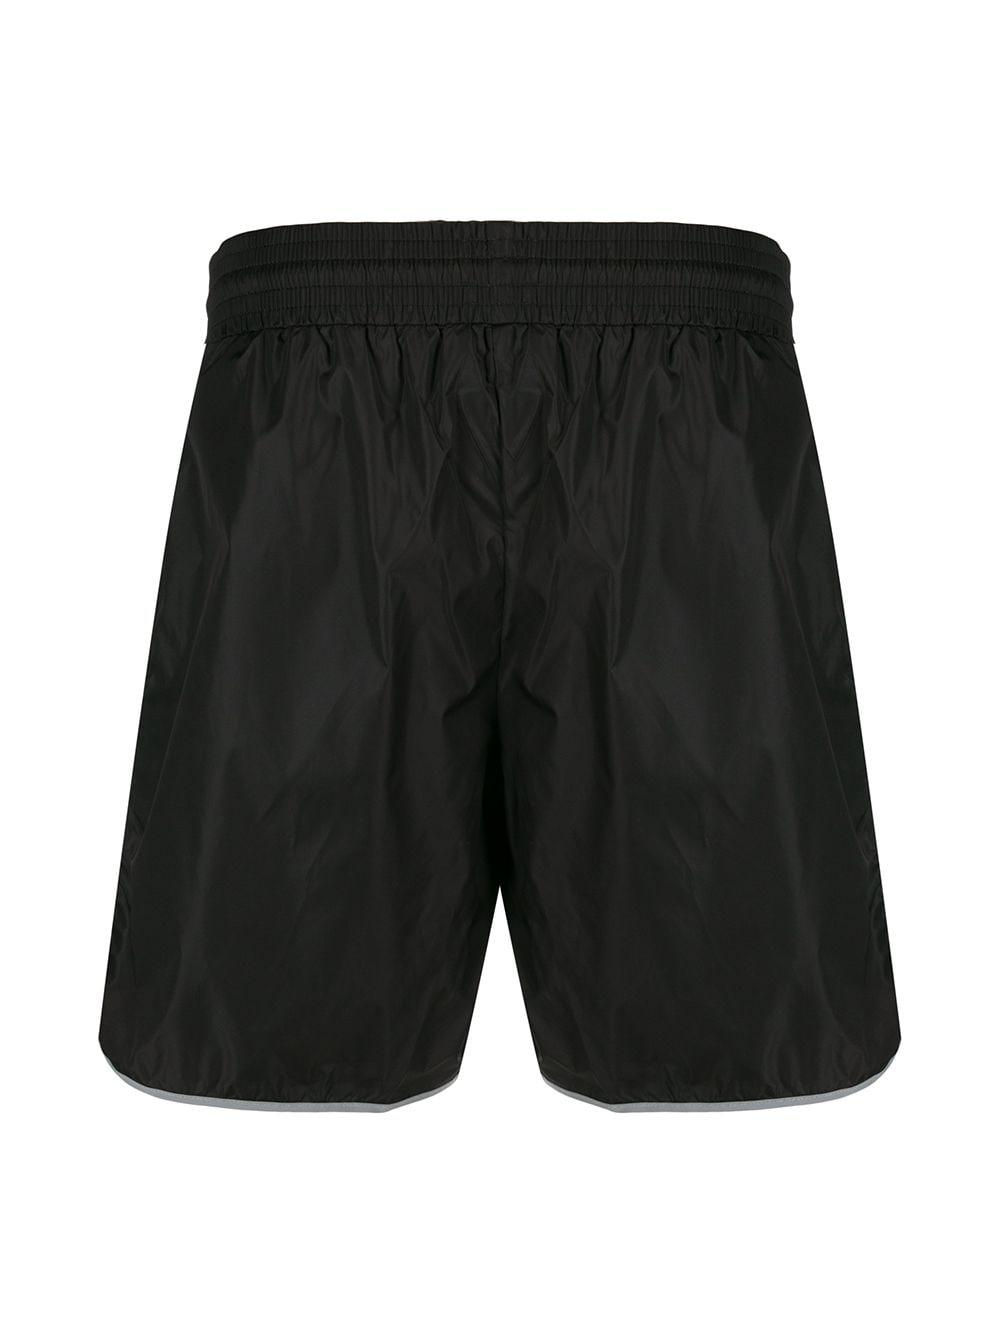 Gucci Interlocking G Stripe Swim Shorts in Black for Men - Lyst